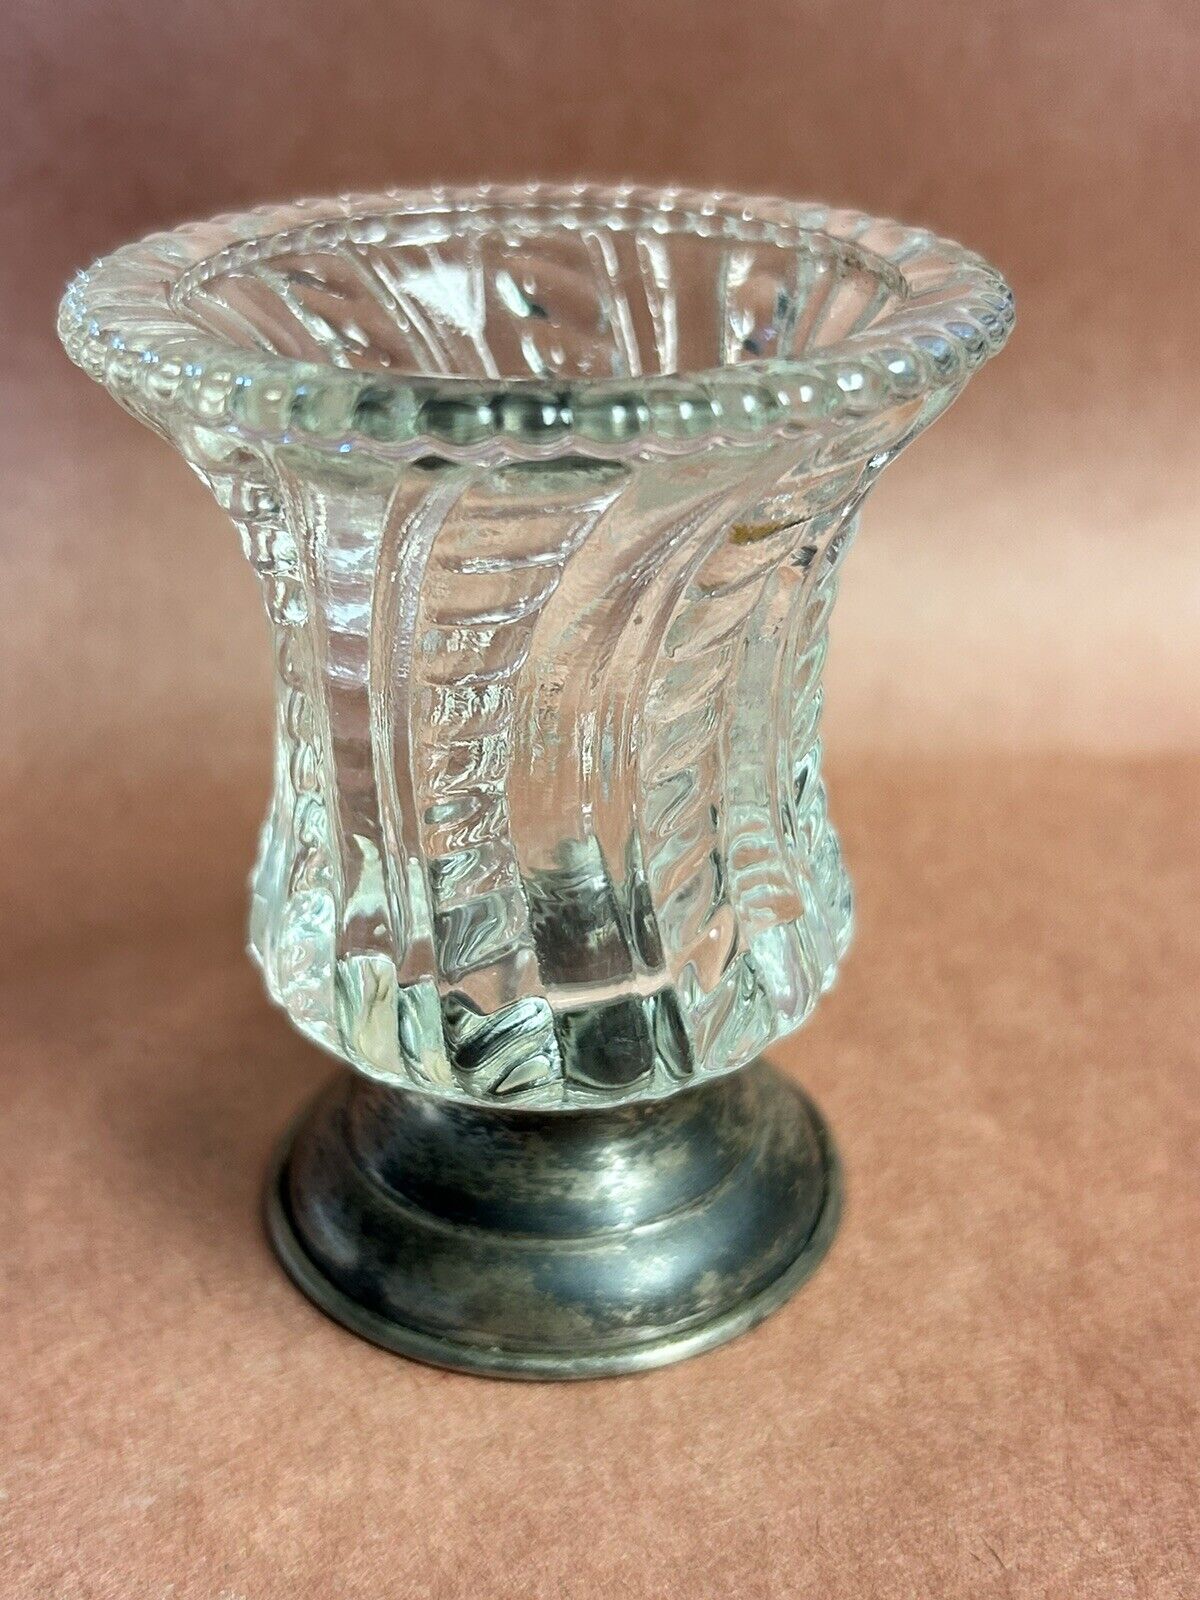 Vintage lead crystal glass candle holder